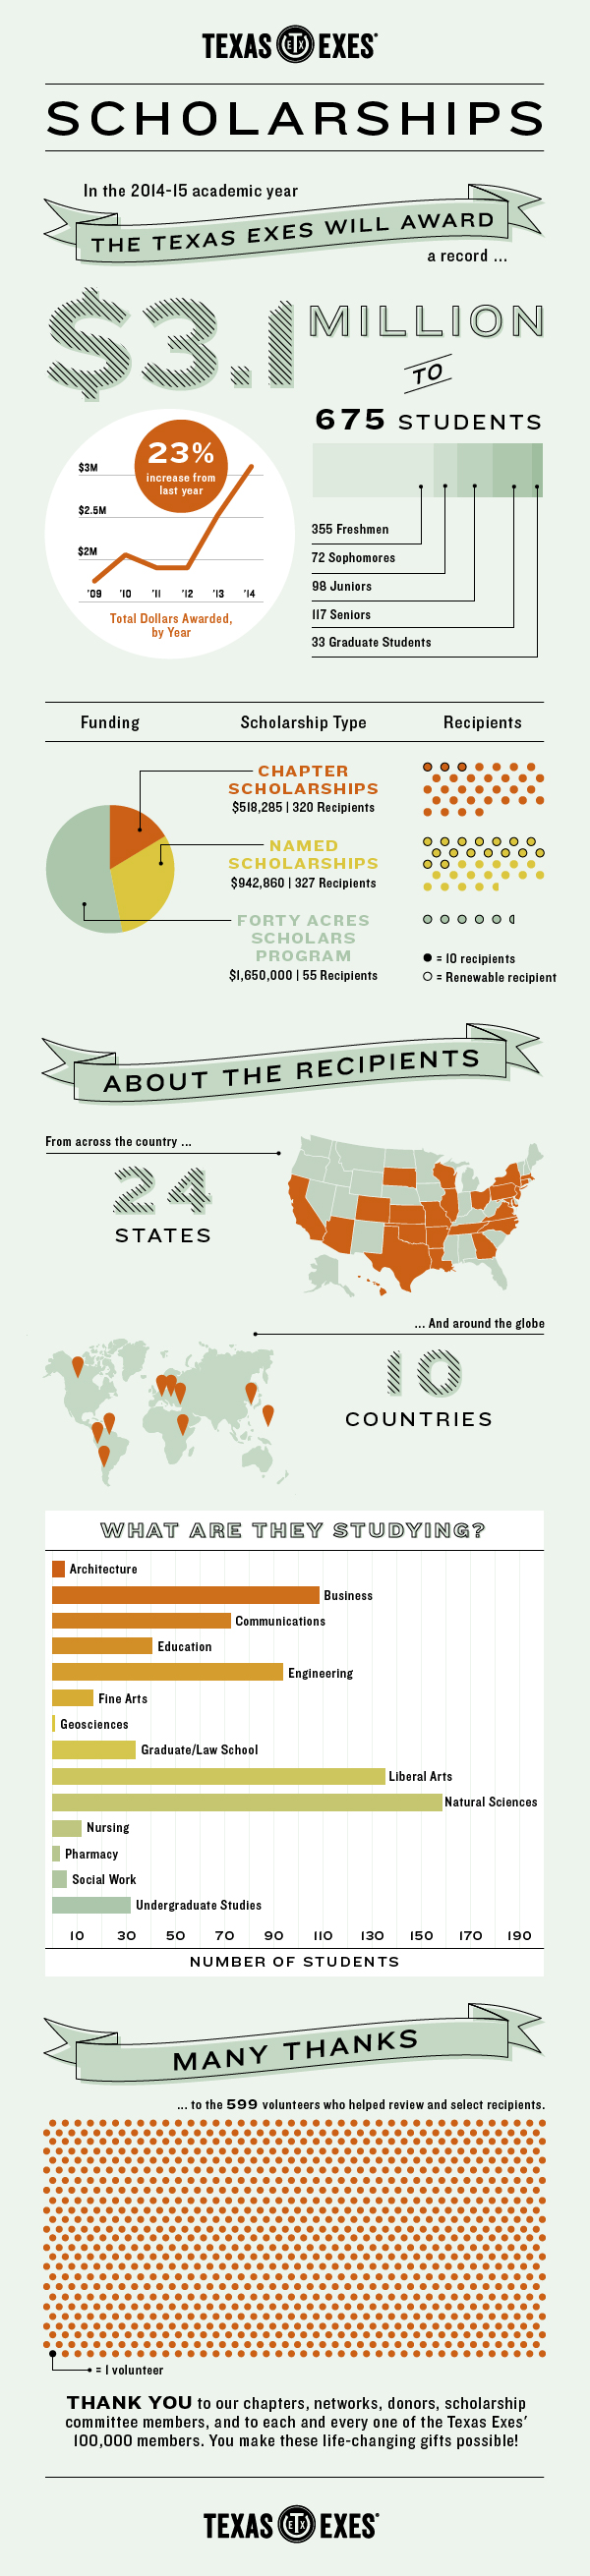 2014-2015 Scholarship Infographic